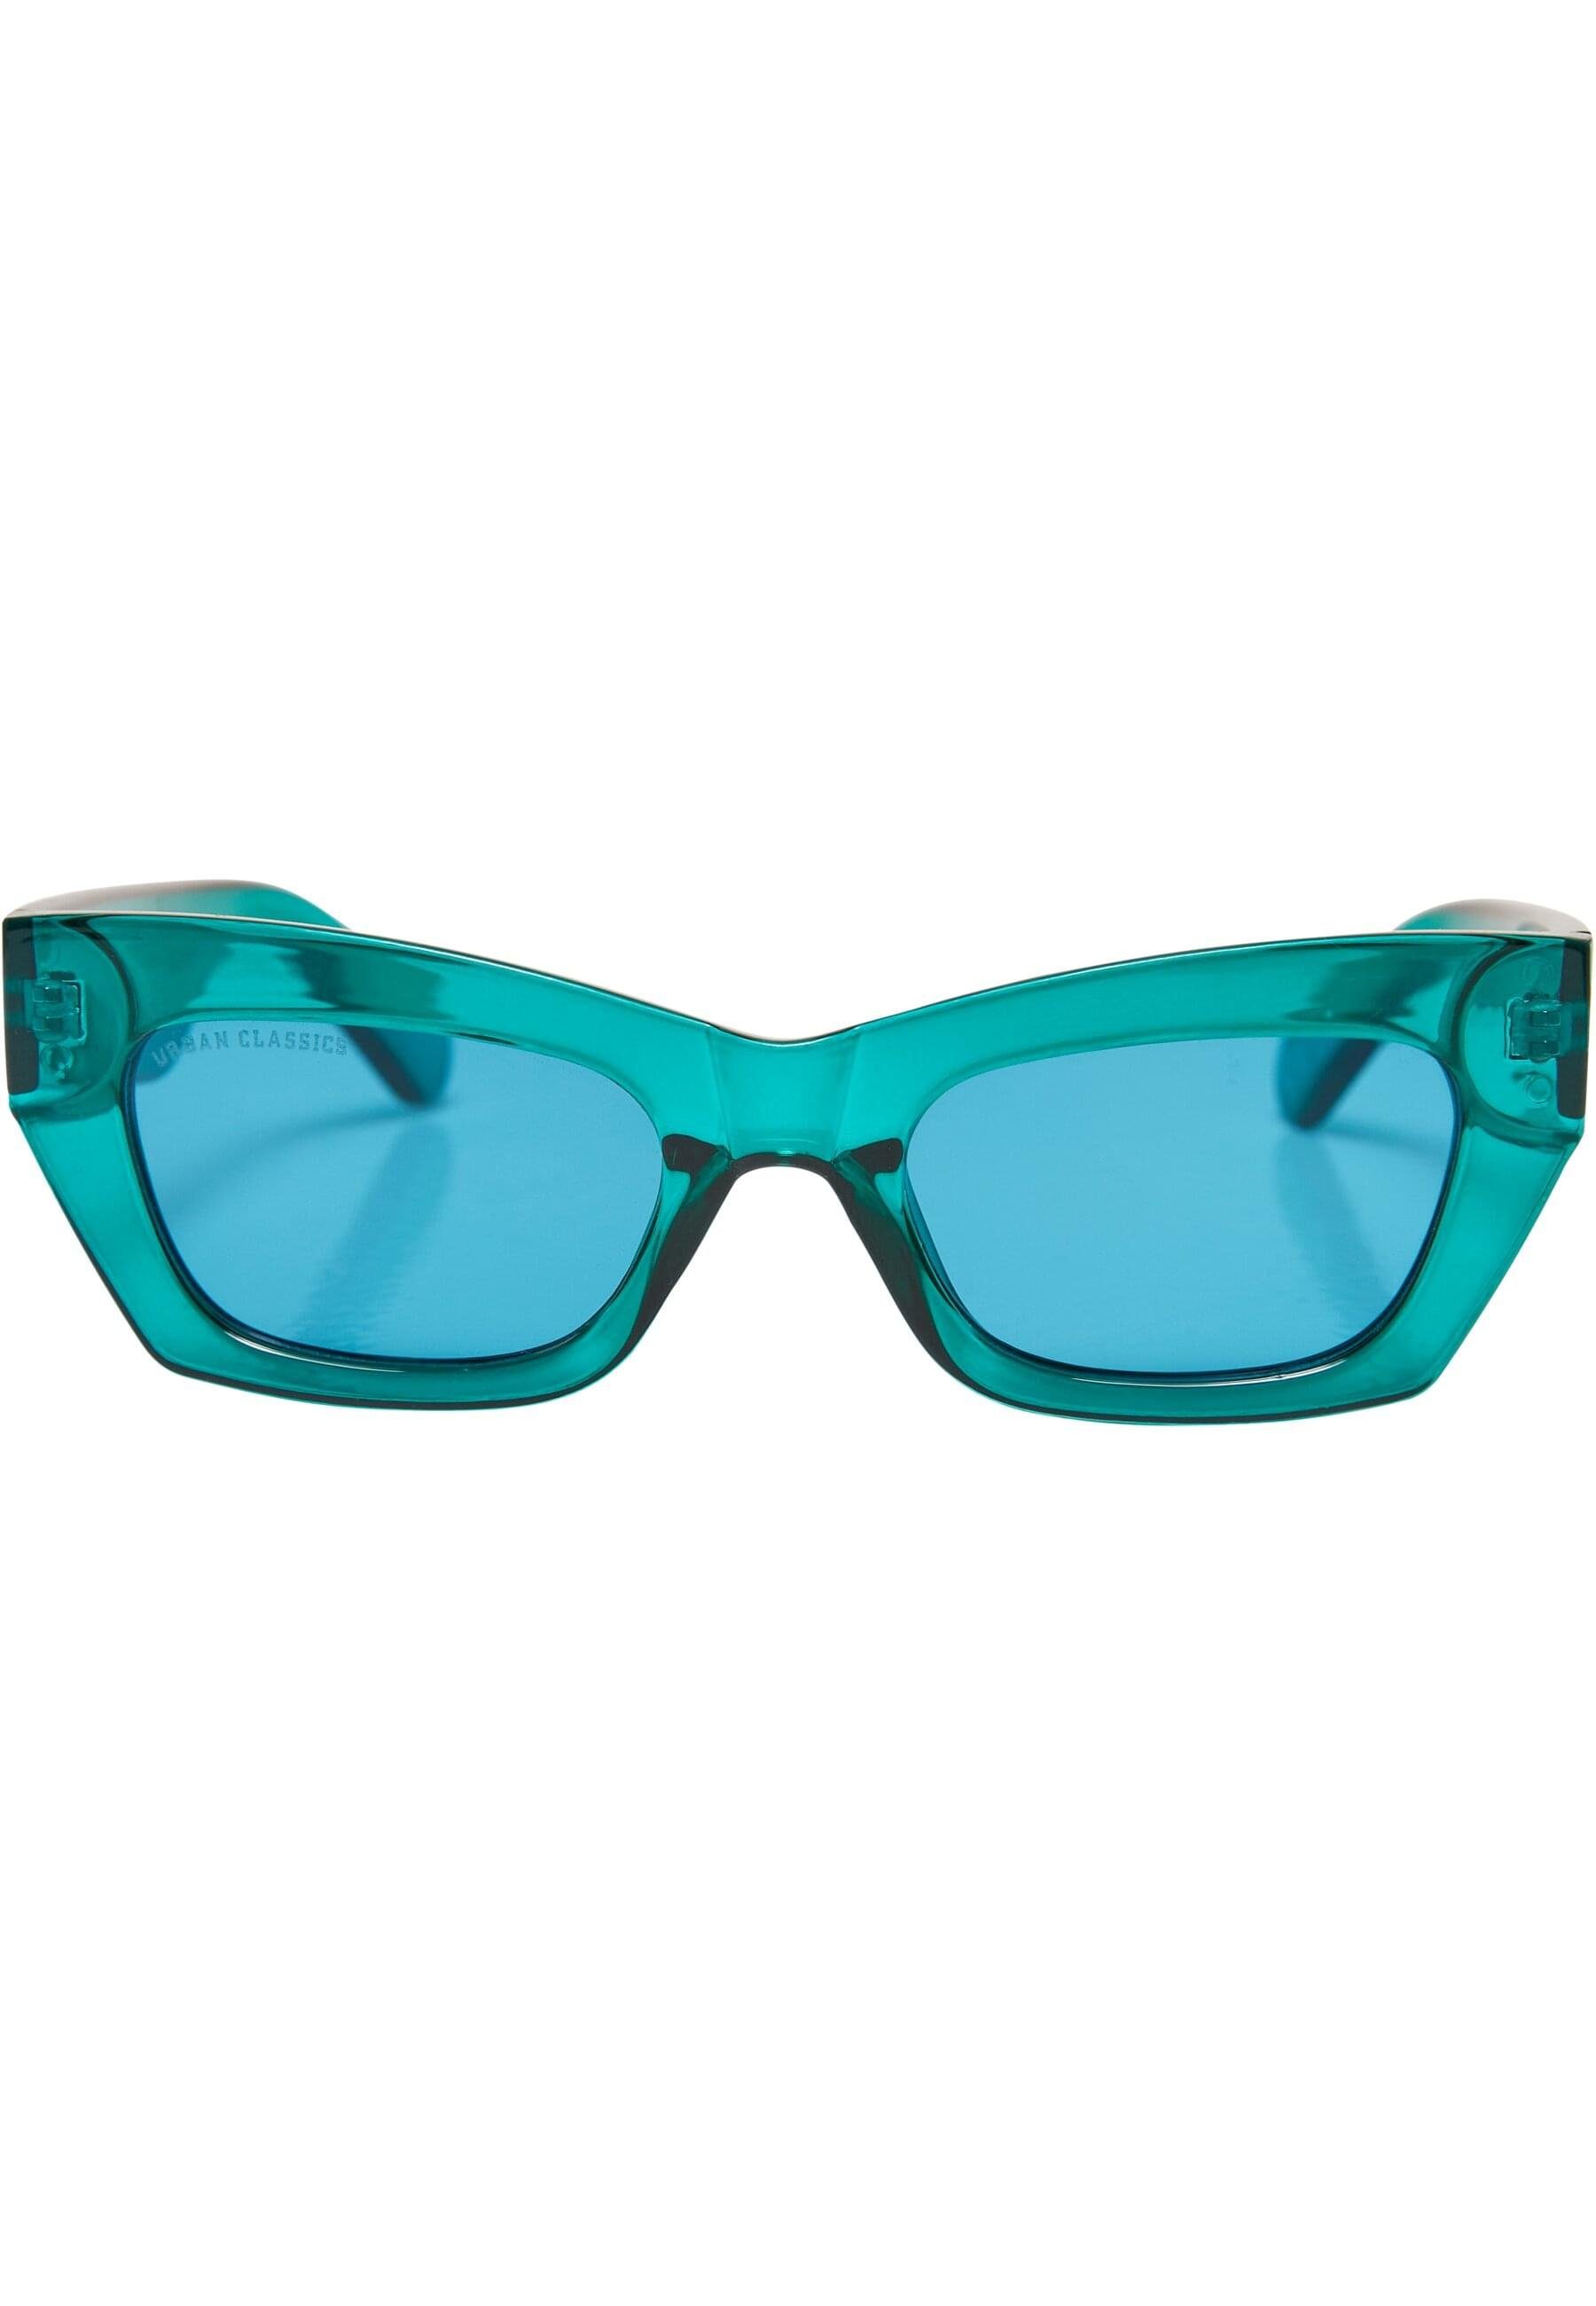 URBAN CLASSICS Sonnenbrille Unisex Sunglasses Venice transparentwatergreen